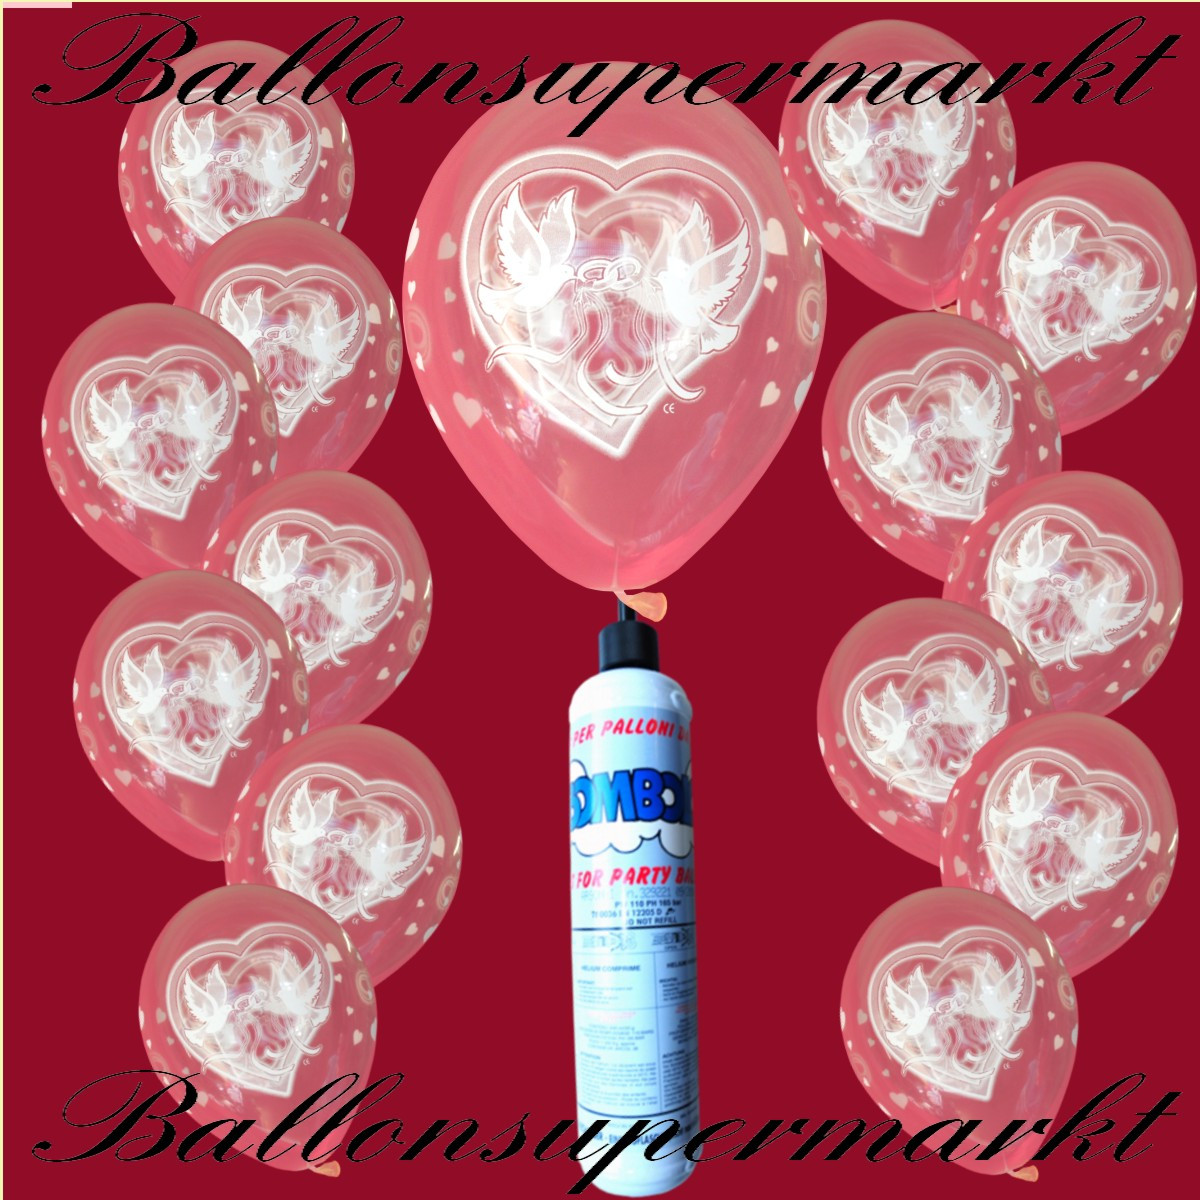 Luftballons Hochzeit Helium
 Luftballons Helium Set Miniflasche Latex Luftballons mit